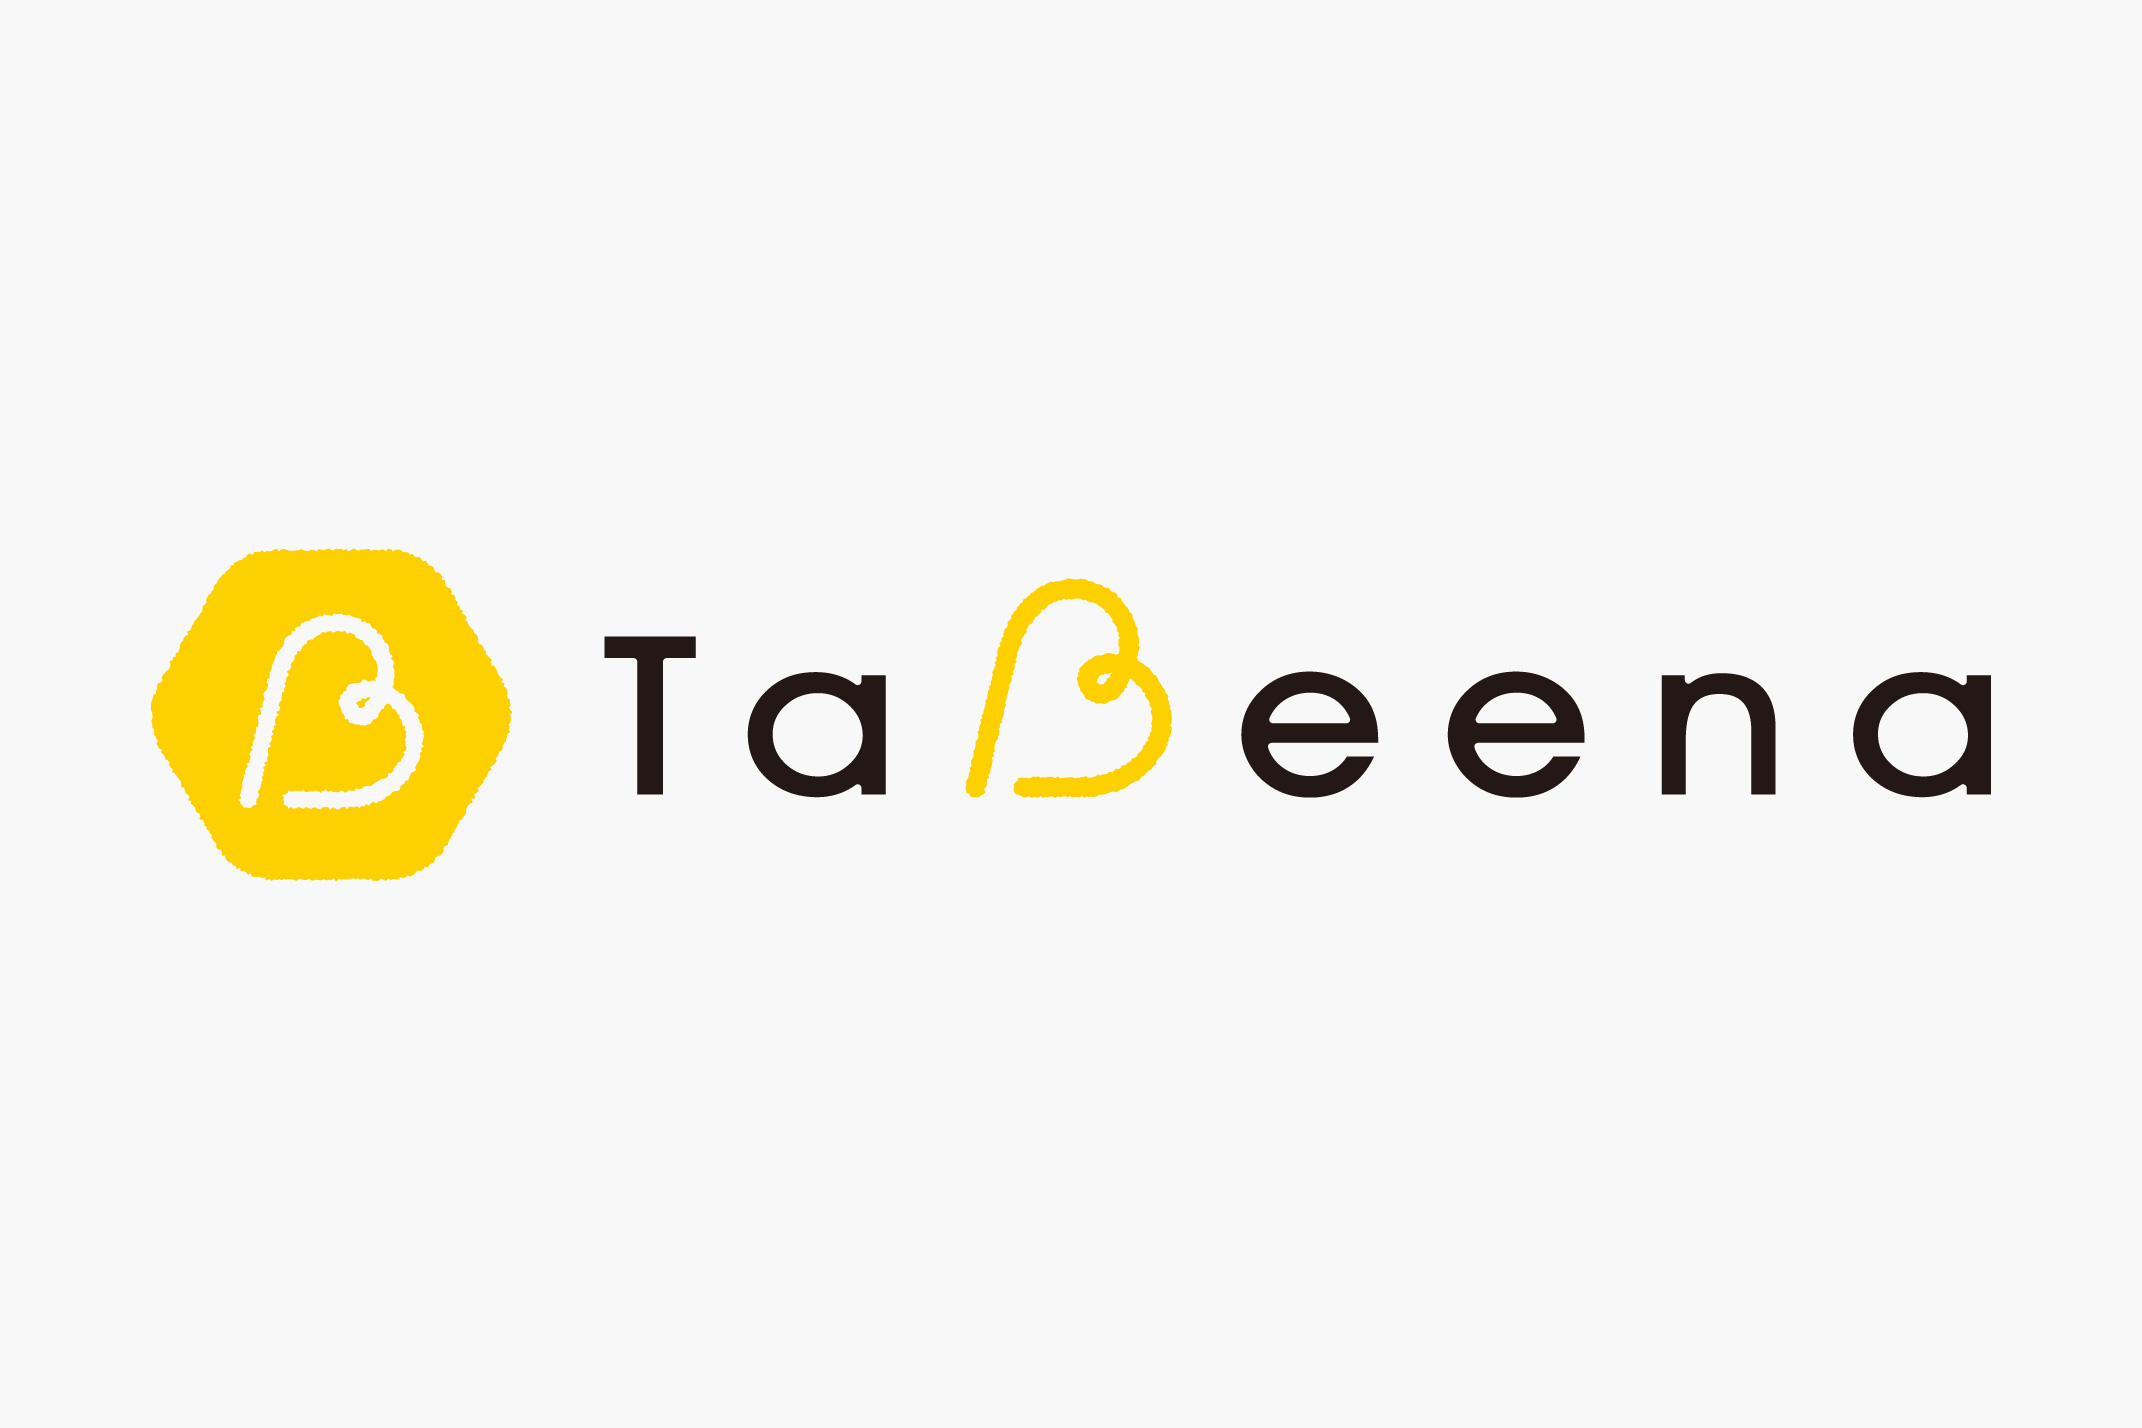 TaBeena / ロゴの写真です